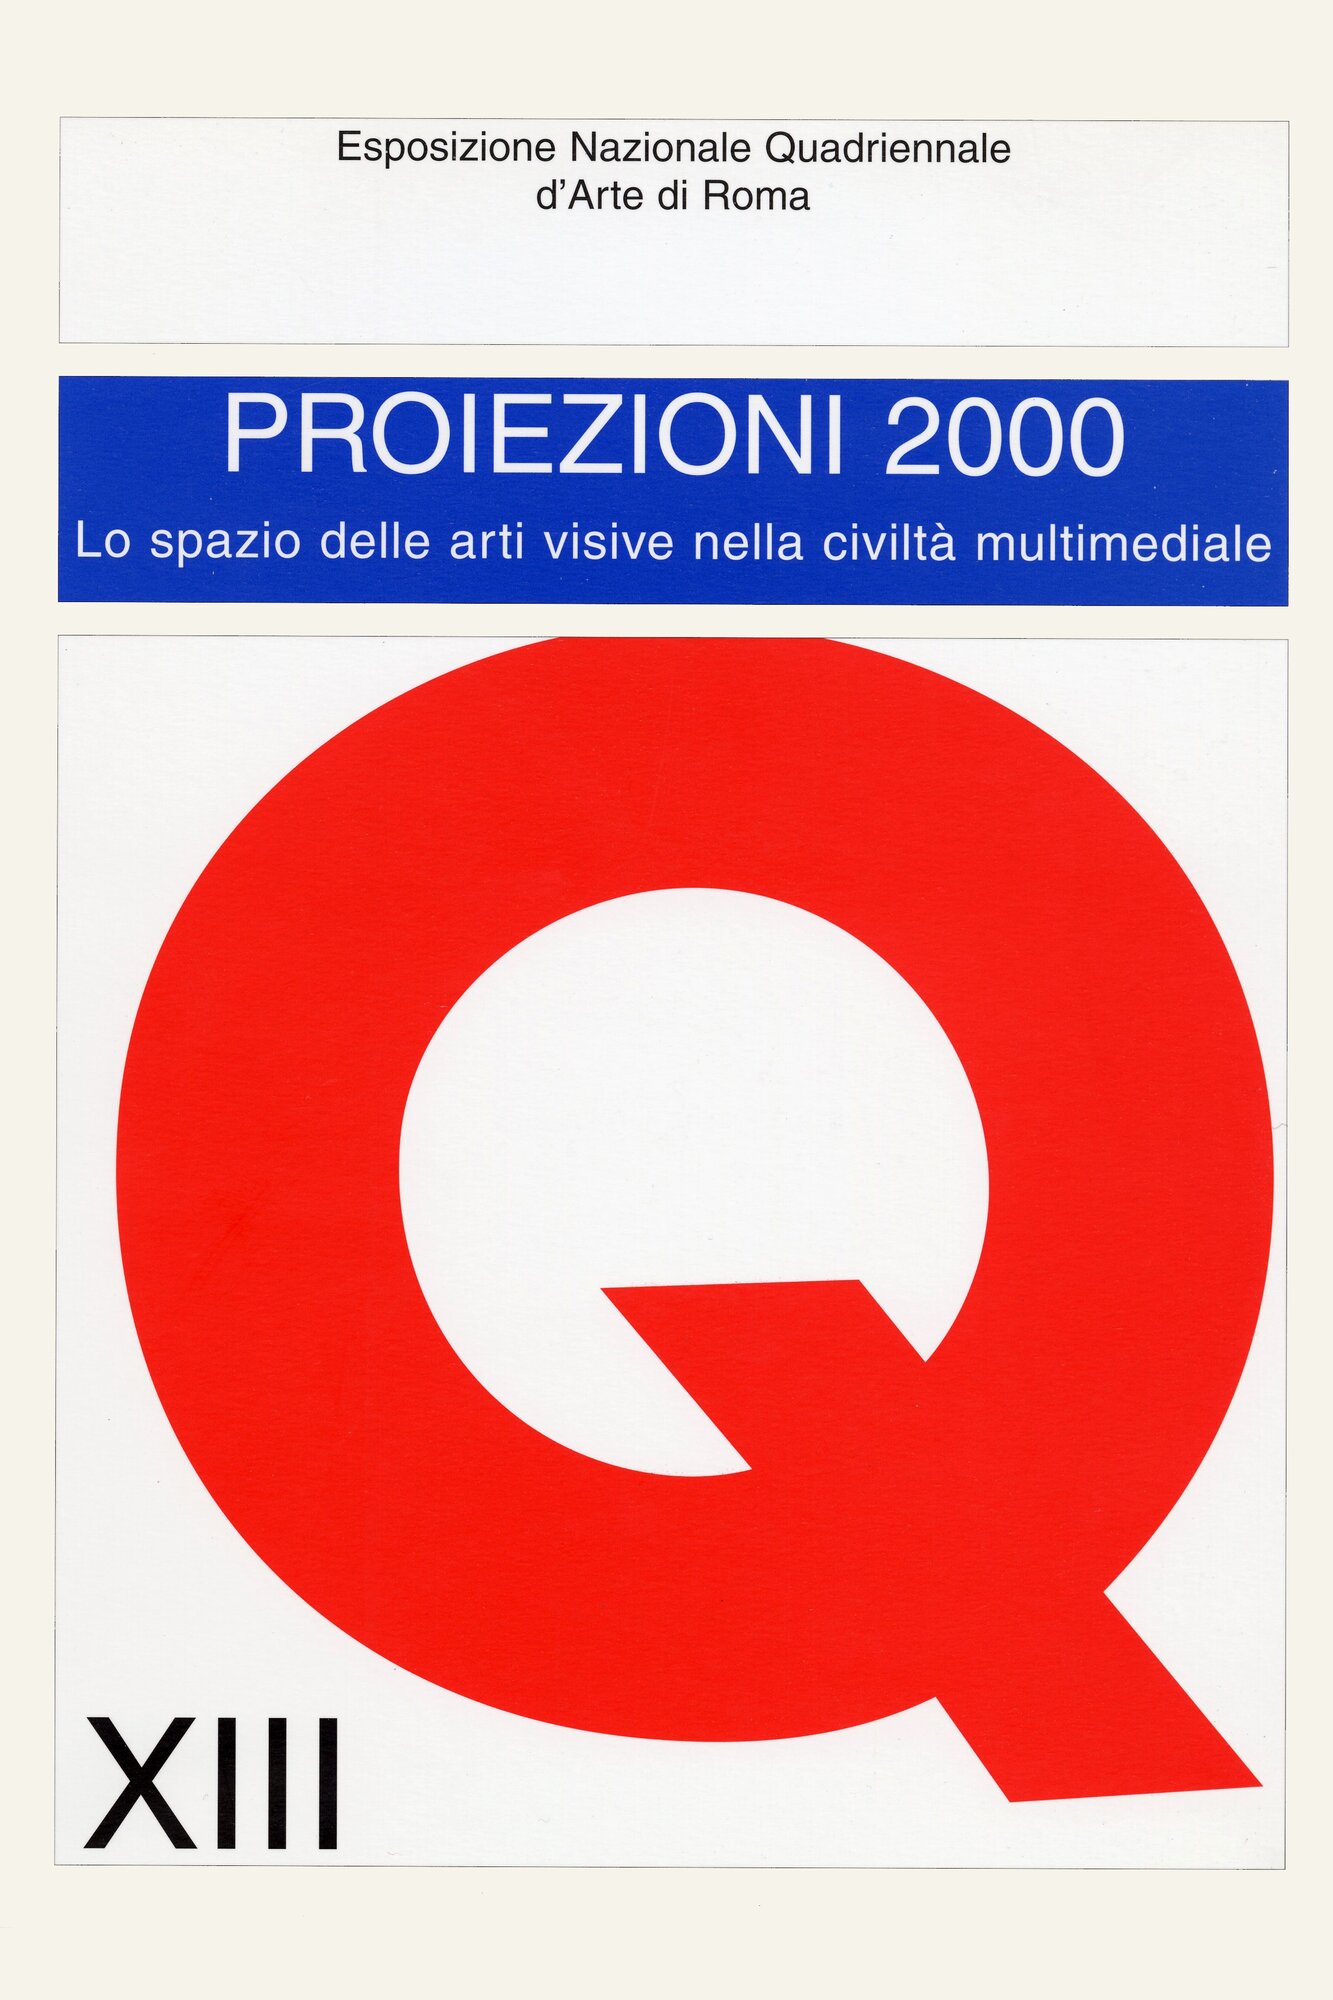 1999_XIII Quadriennale Proiezioni 2000.jpg